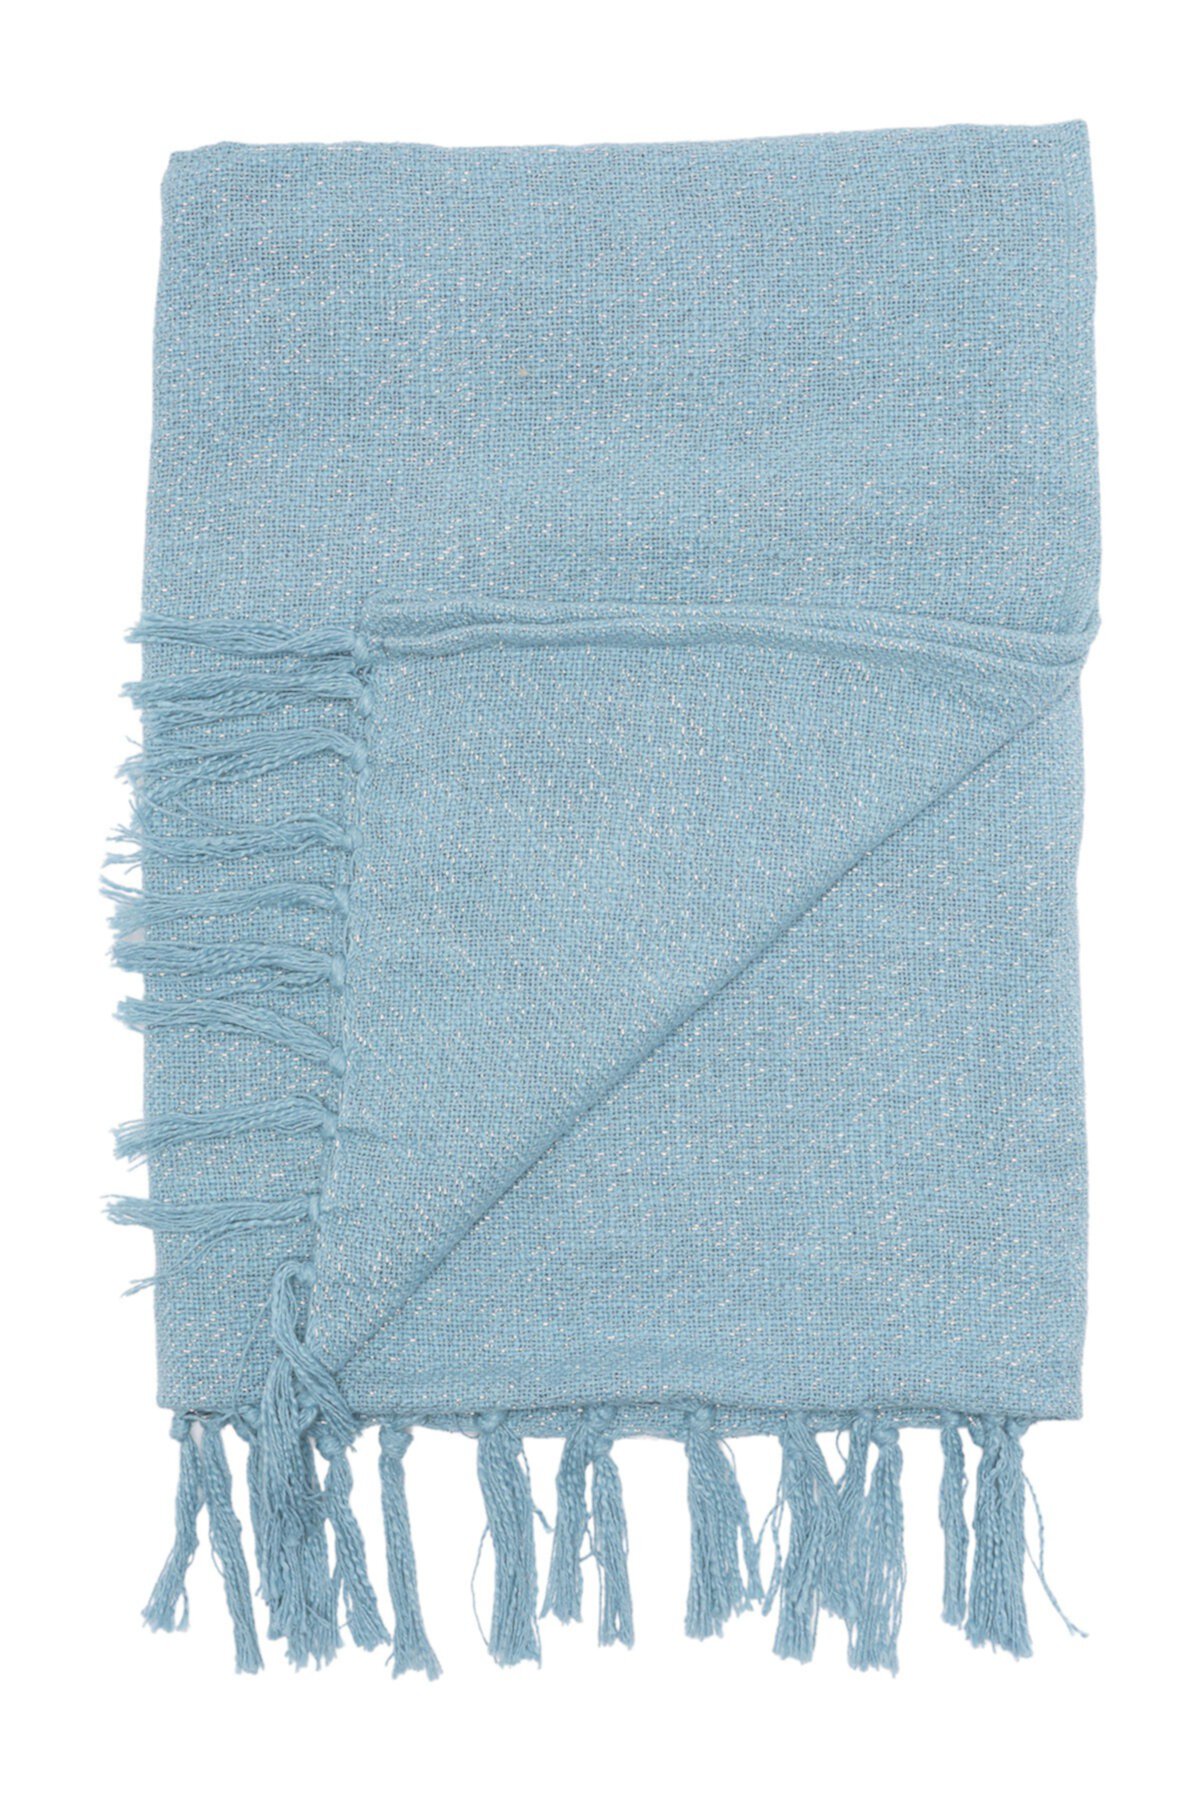 Metallic Woven Throw Blanket - Blue BCBGeneration